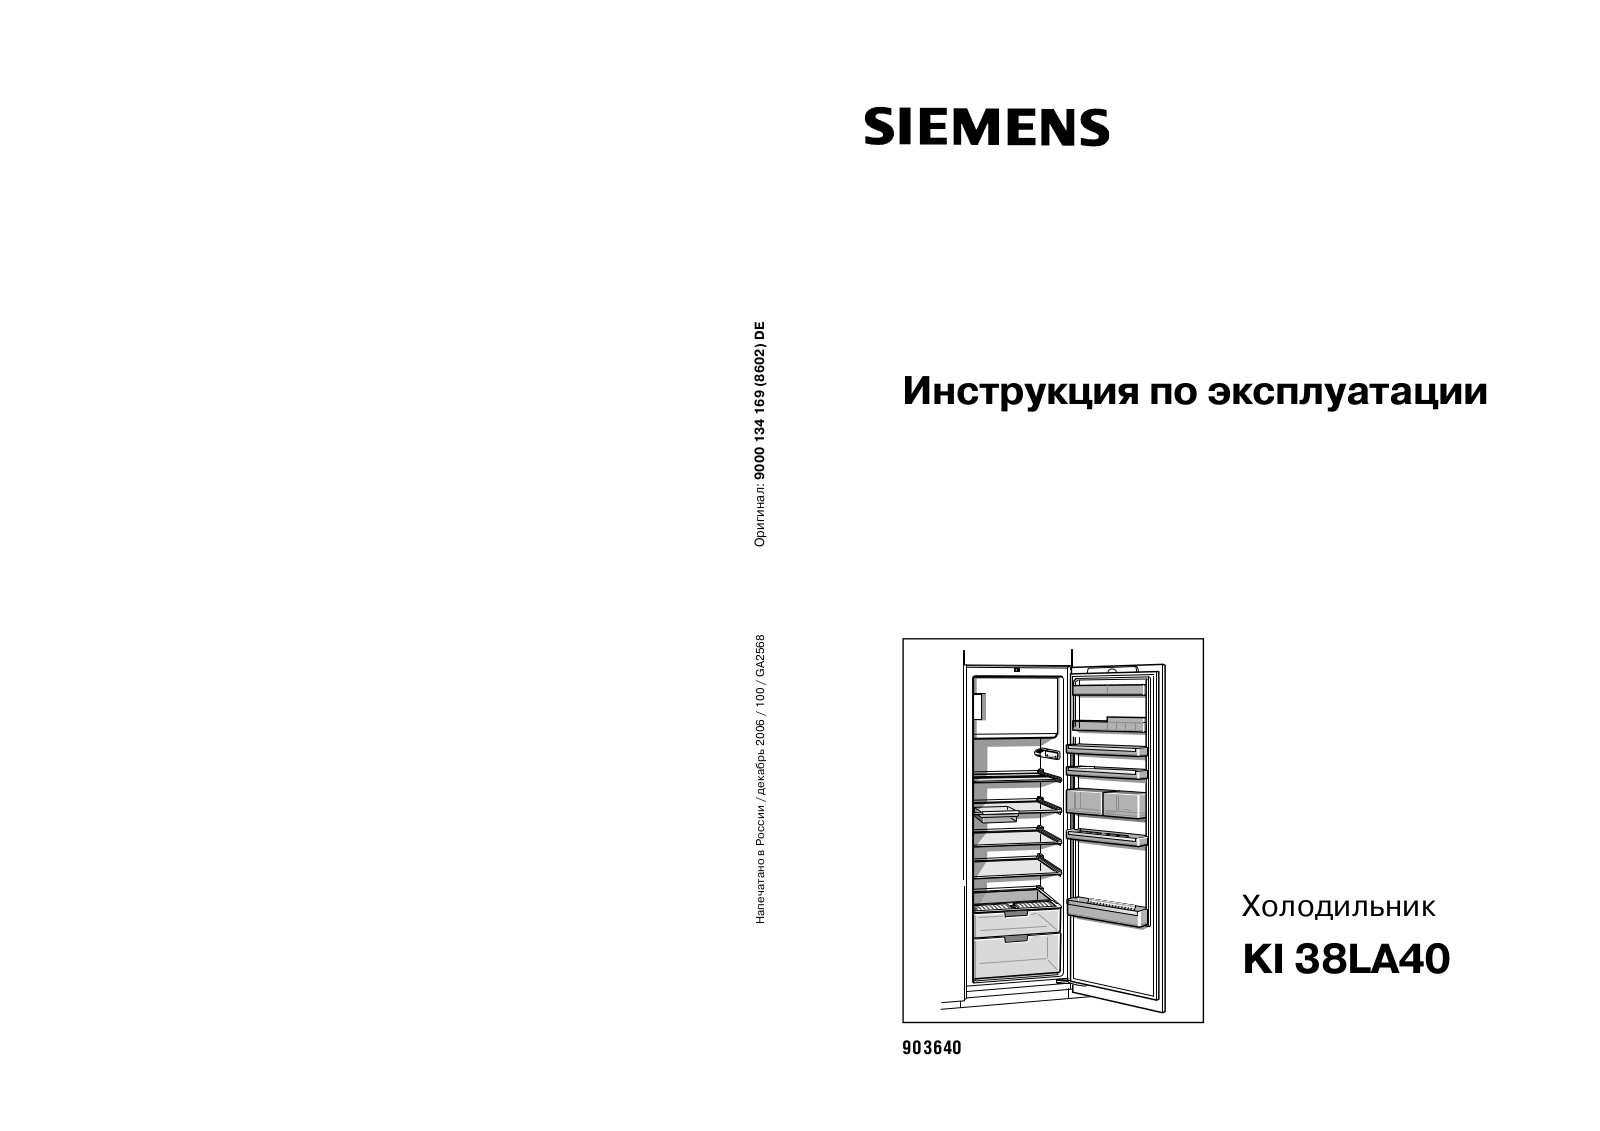 SIEMENS KI38LA40 User Manual